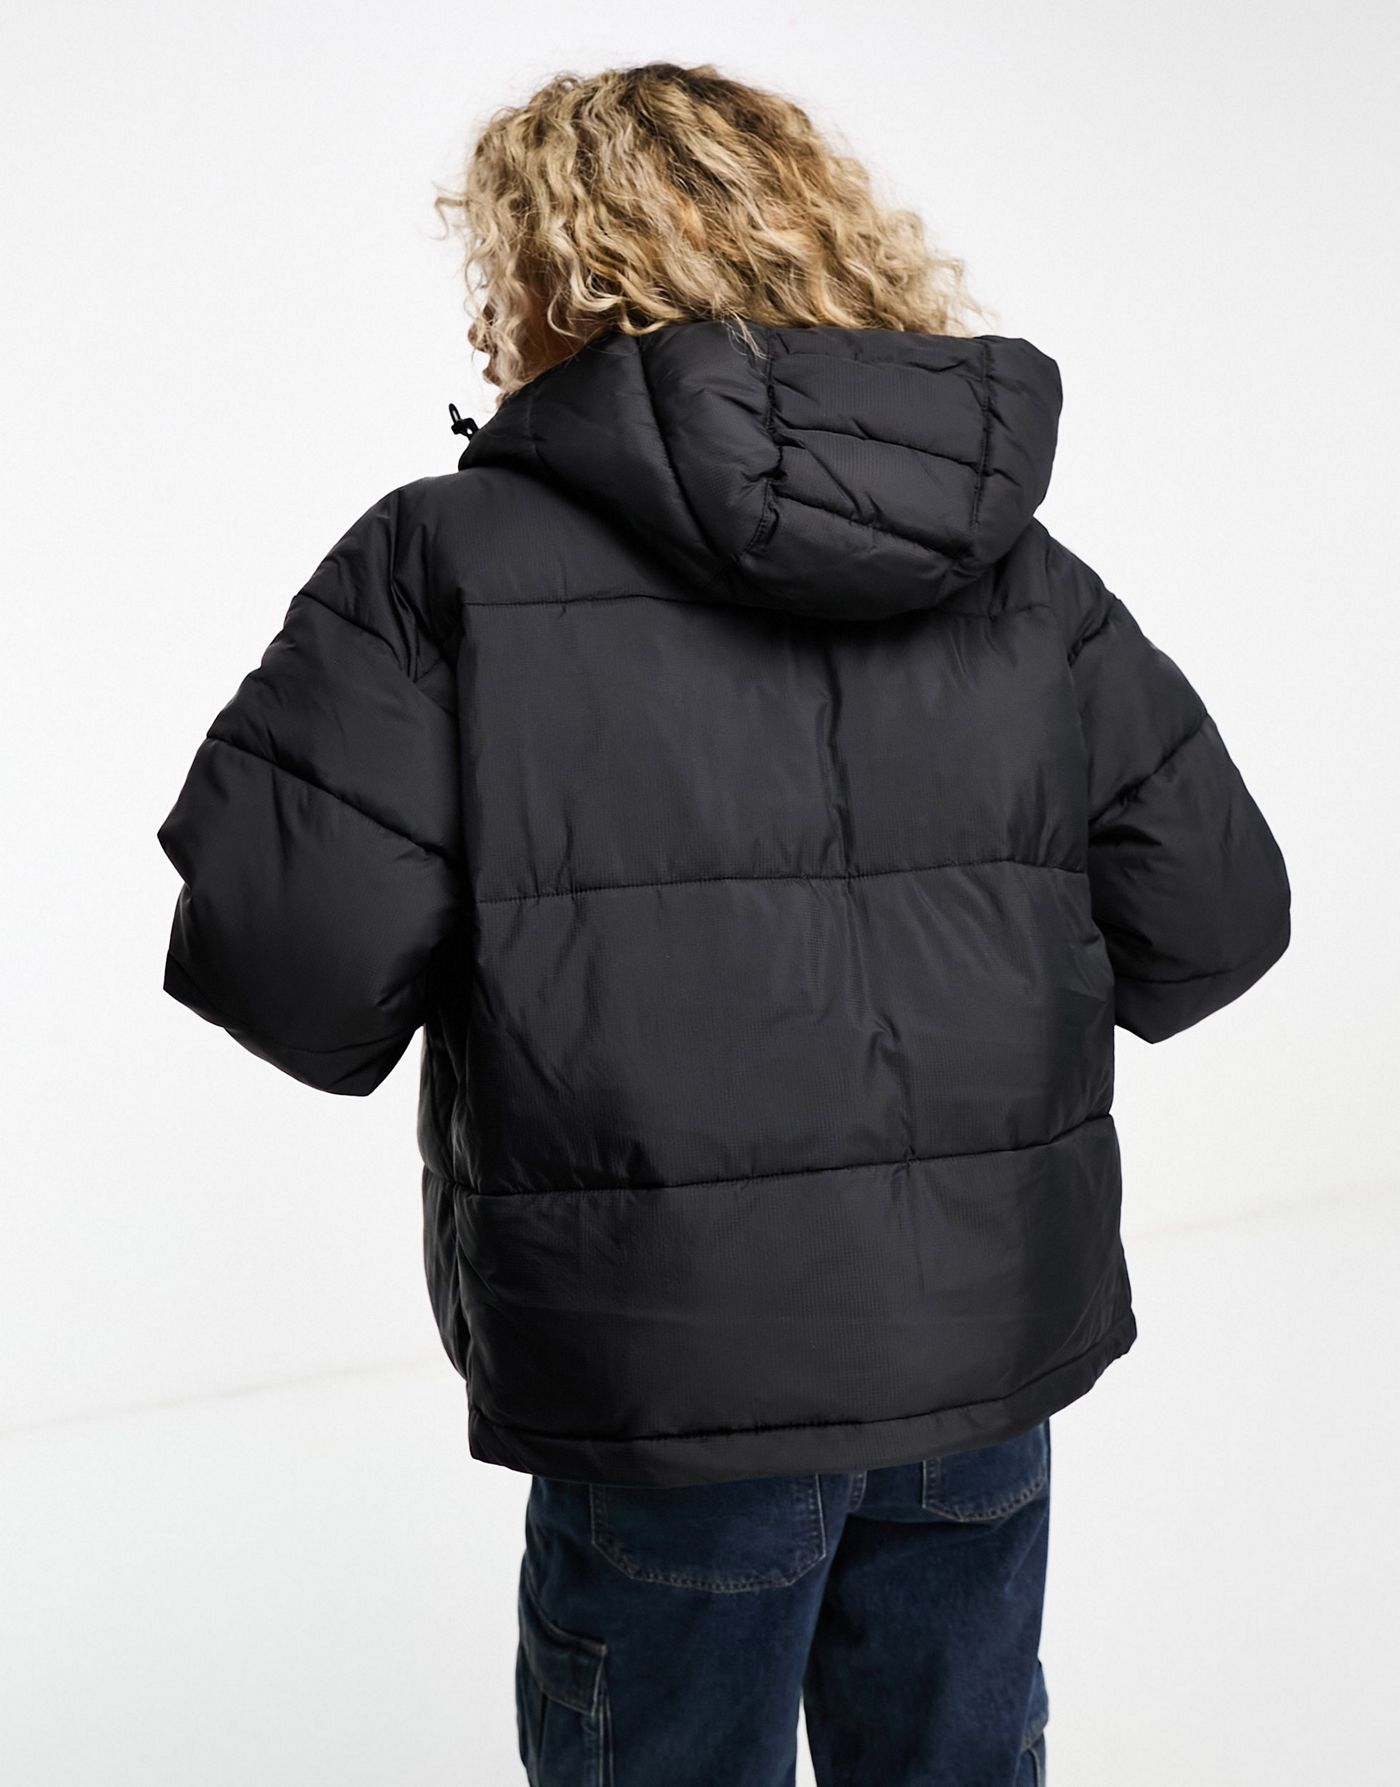 Dickies alatna oversized puffer jacket with hood in black